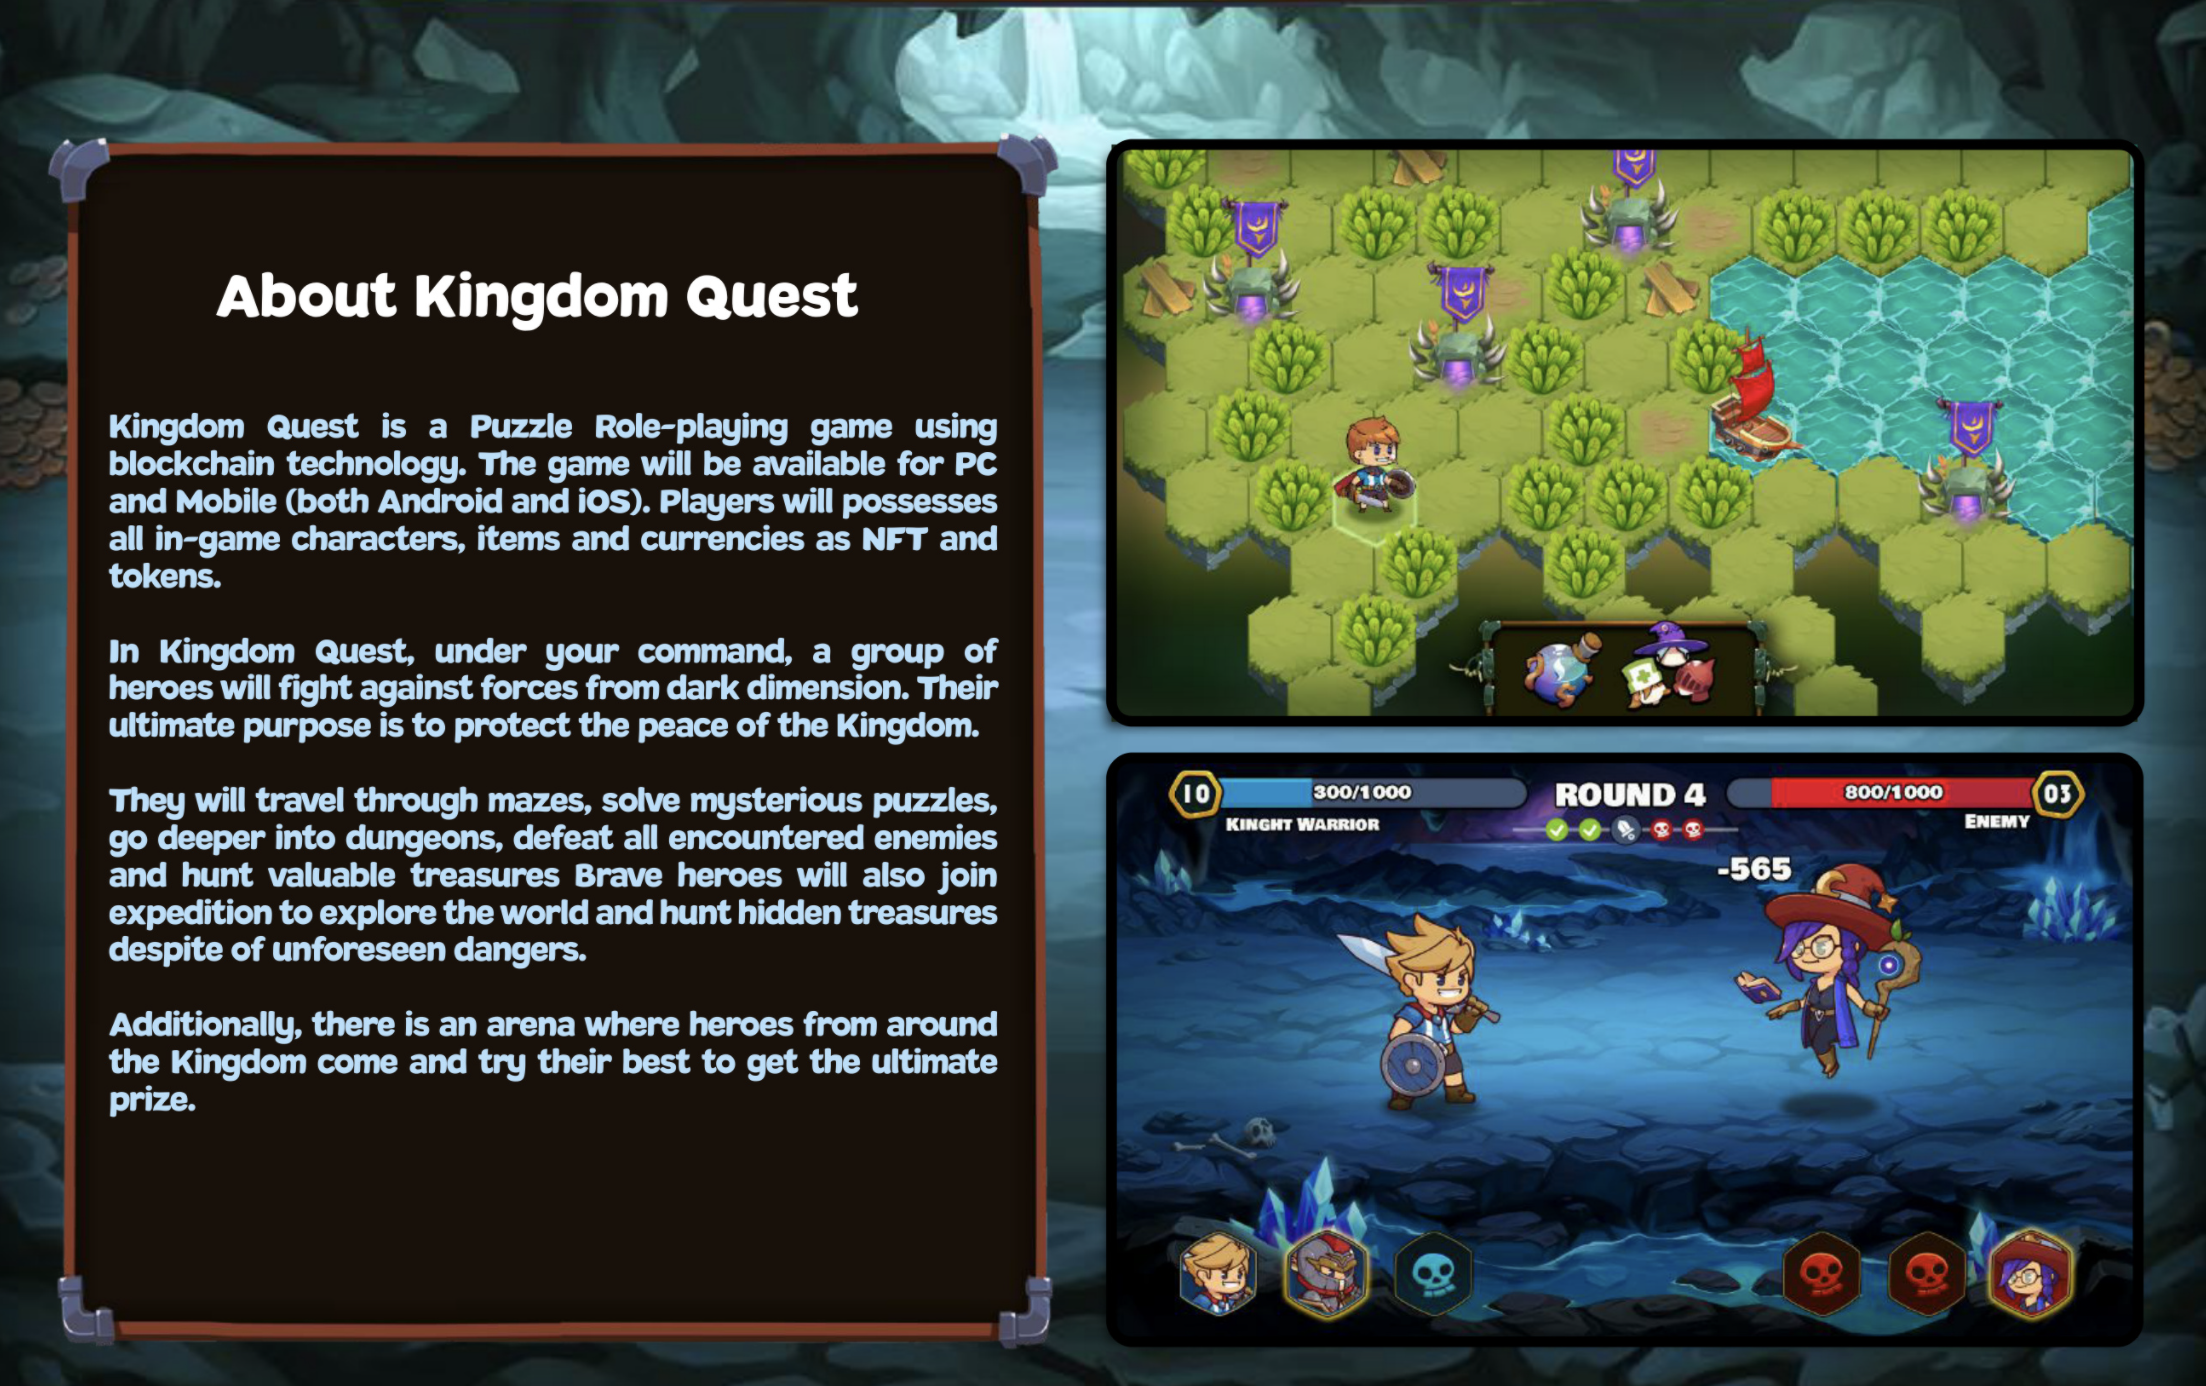 About Kingdom Quest